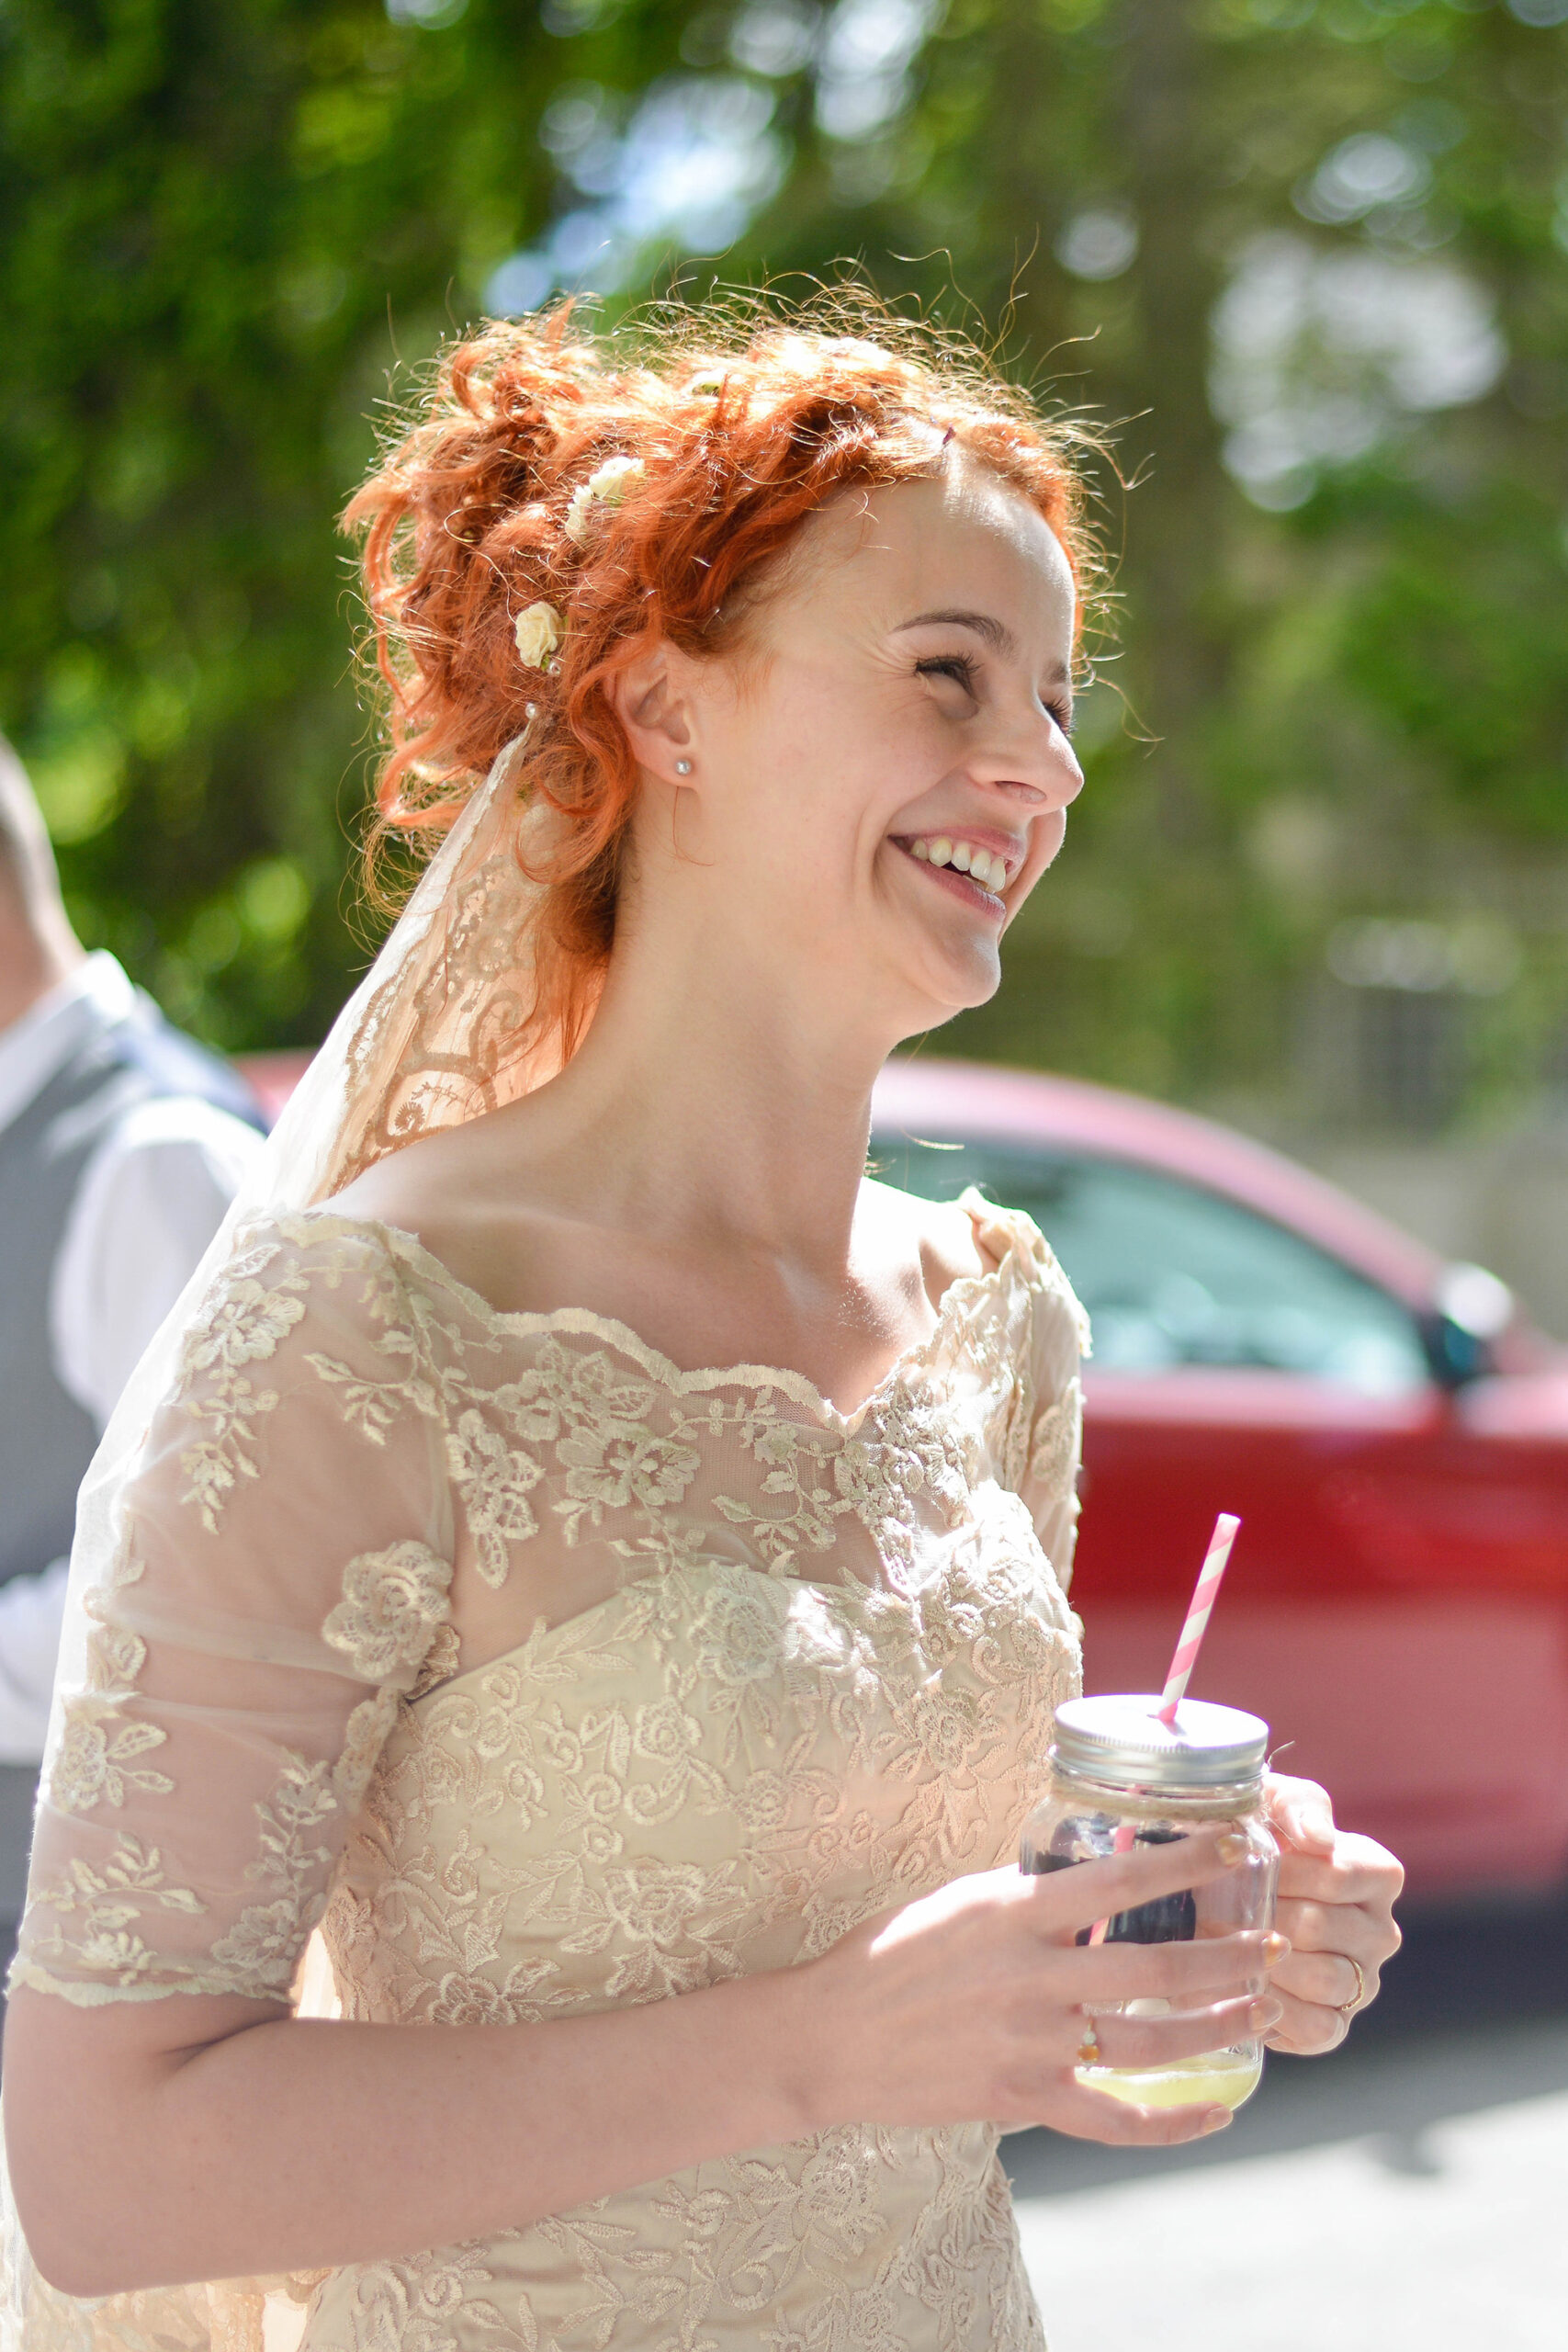 Heather_Darrell_Homemade-Rustic-Wedding_Kimberley-Waterson-Fine-Art-Photography_SBS_014